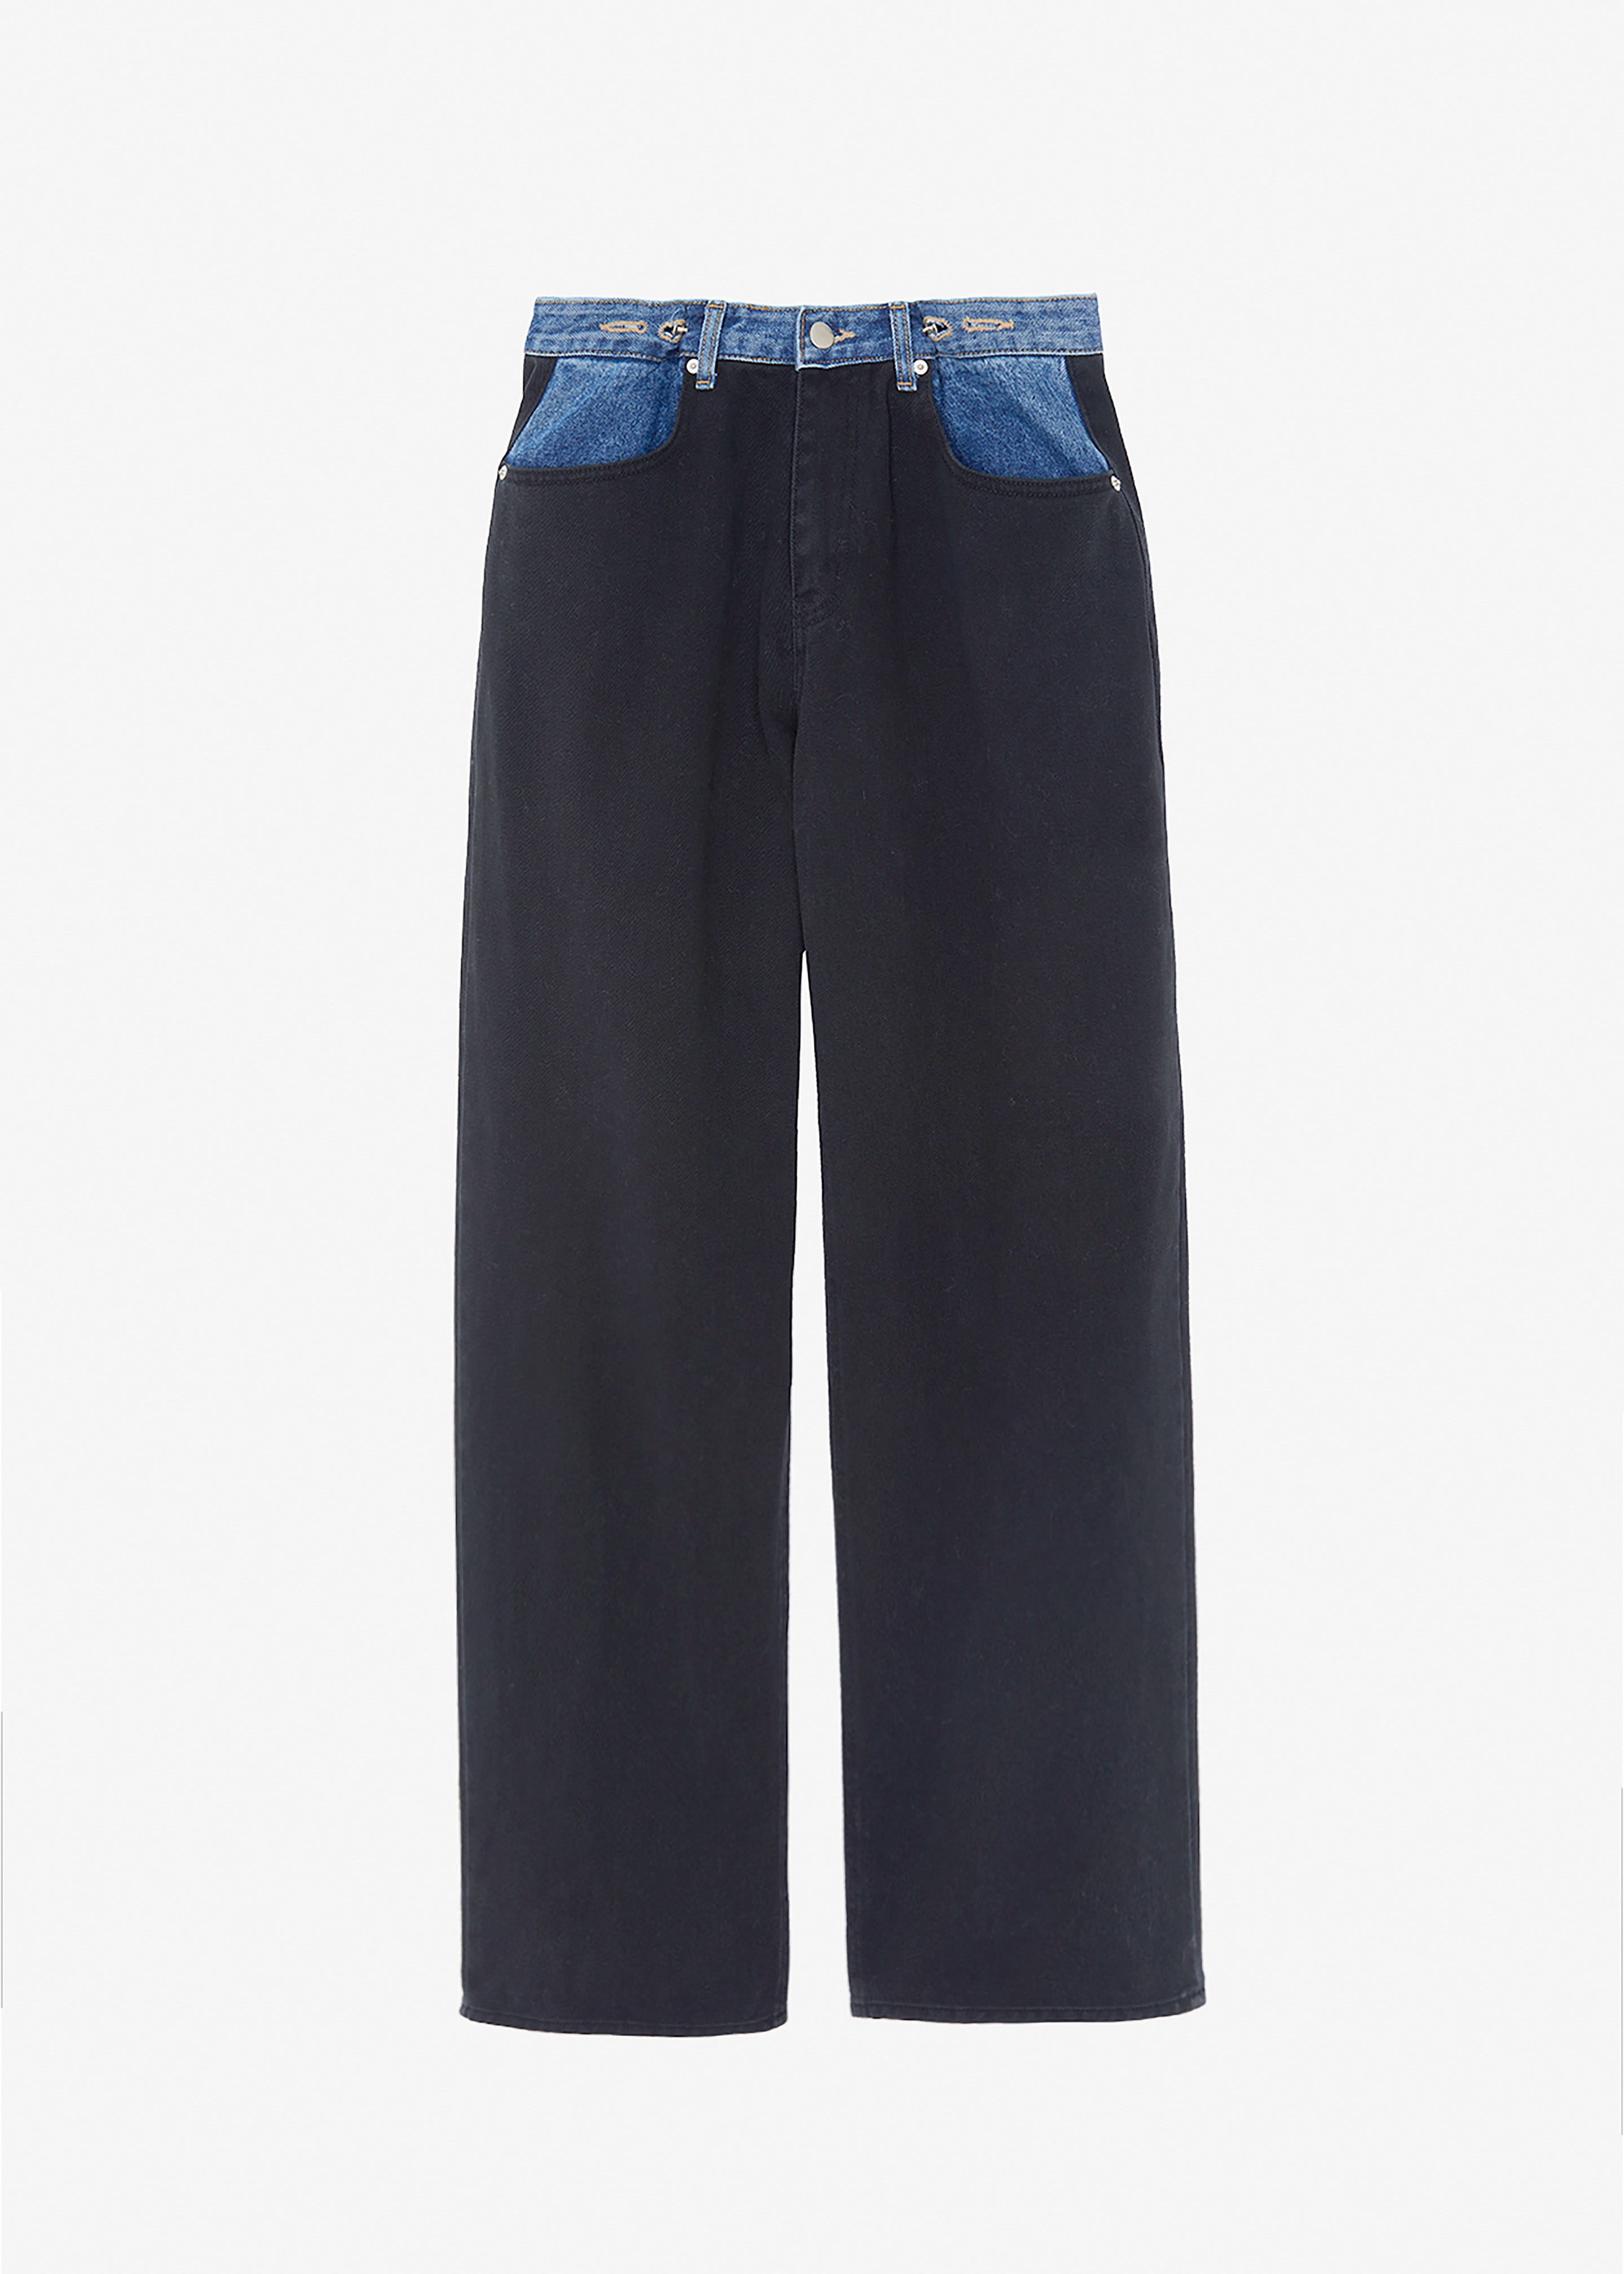 Hayla Contrast Denim Pants - Black/Blue - 10